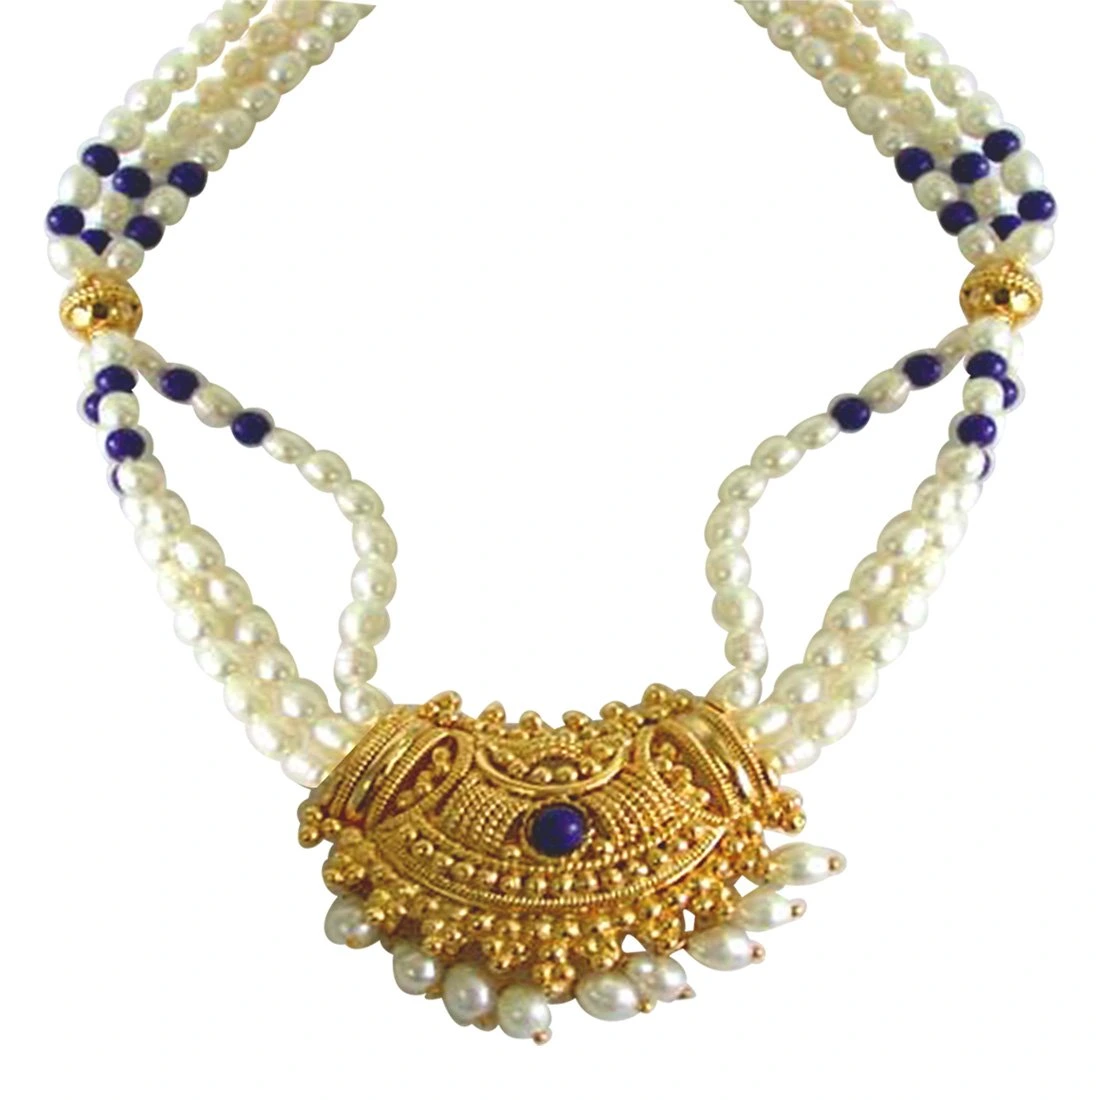 Gold Plated Temple Design Pendant, 3 Line Rice Pearl & Blue Lapiz Beads Pendant Necklace for Women (SNP4B)